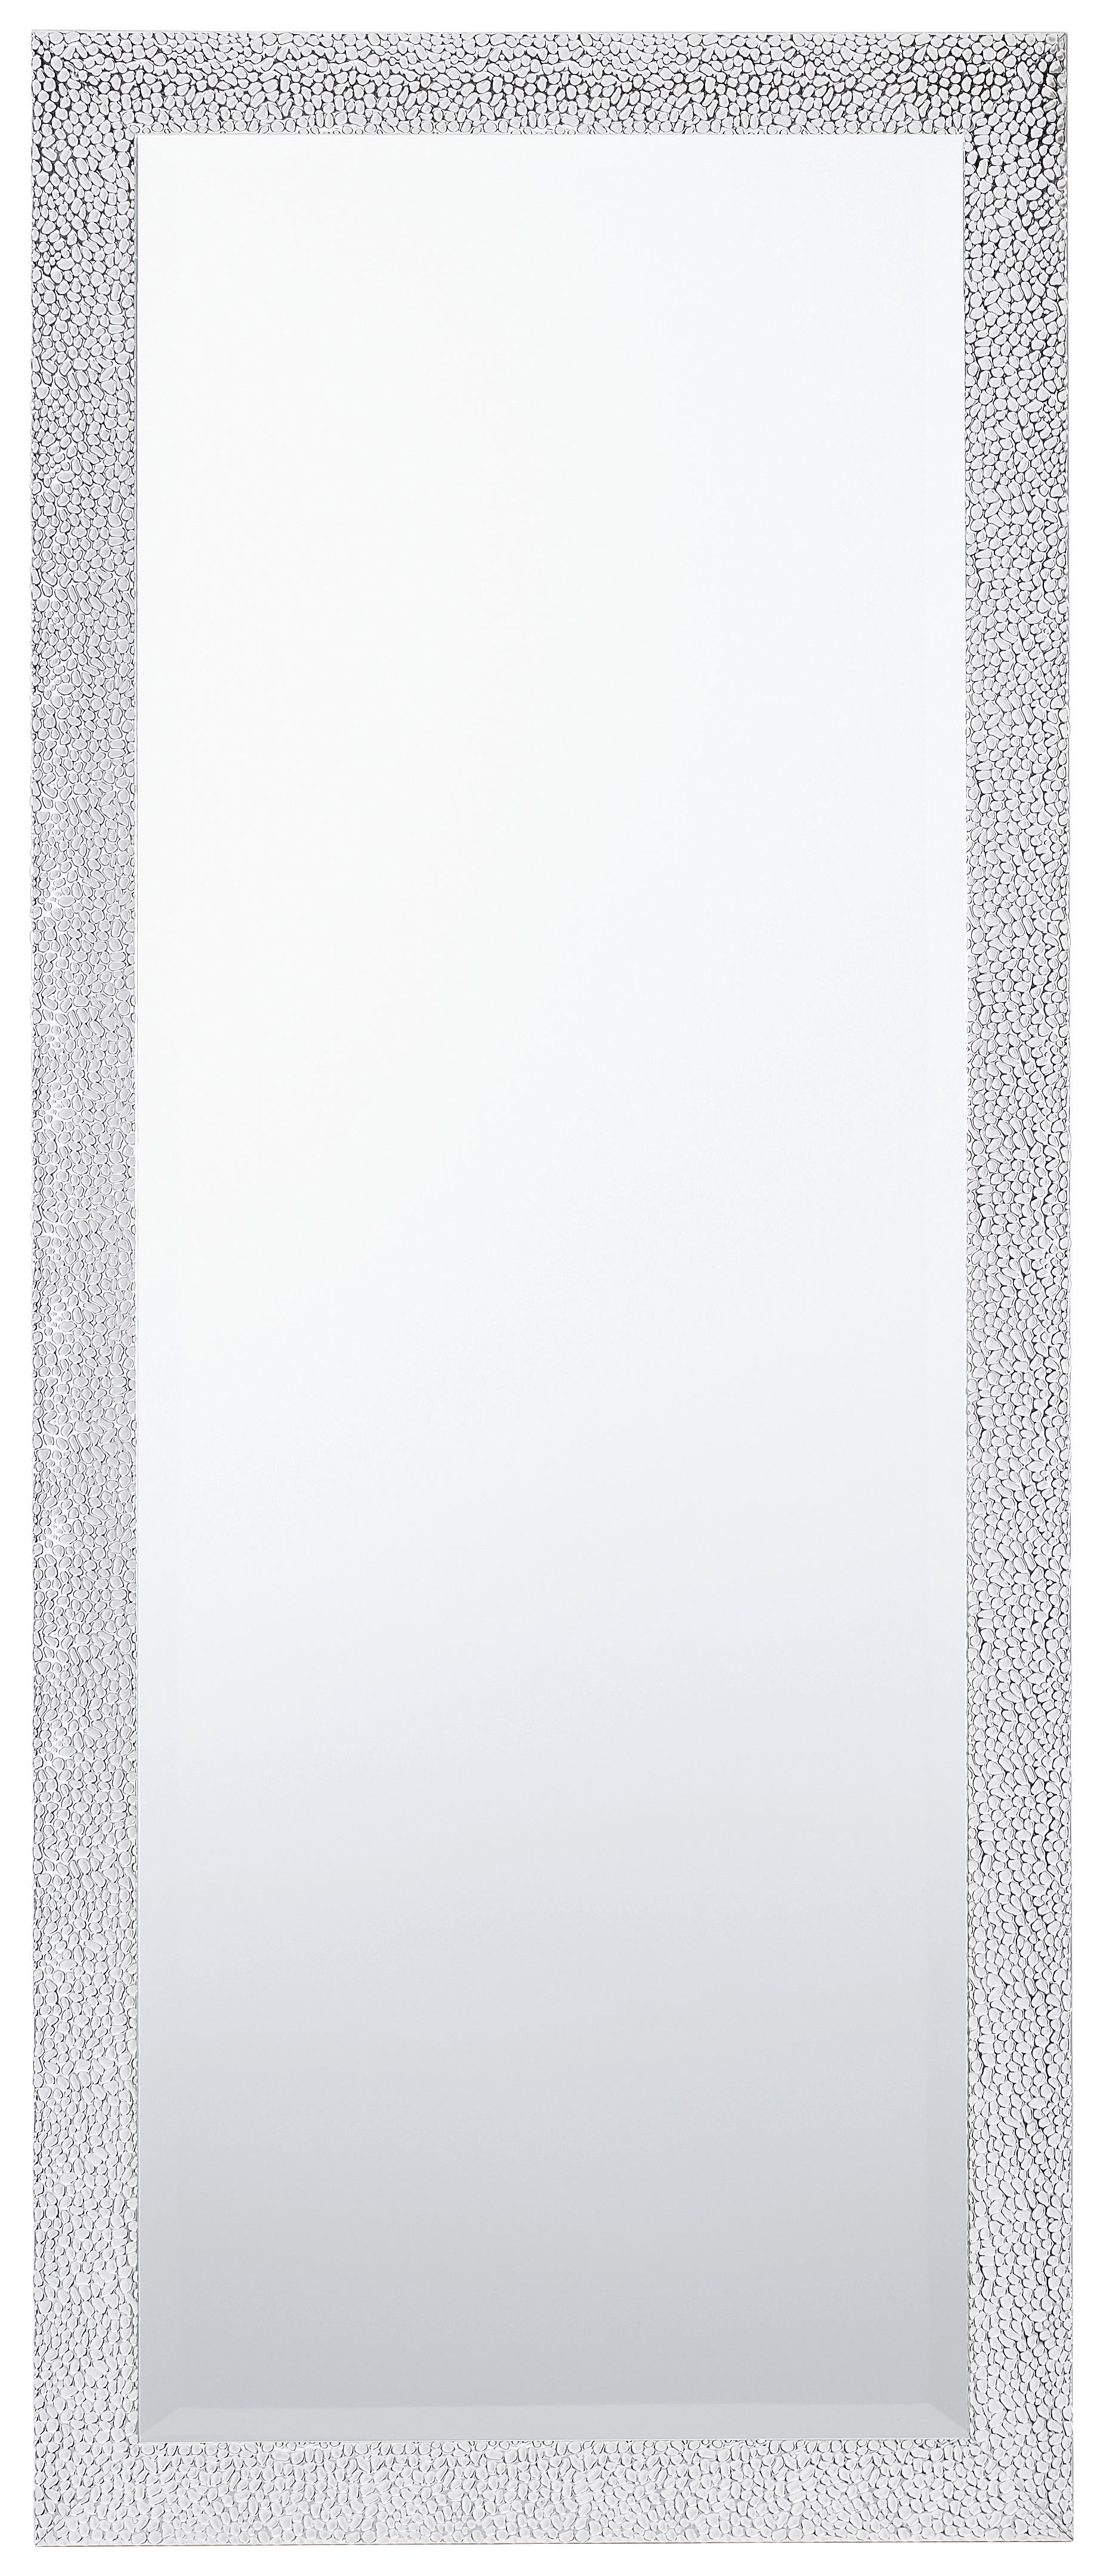 WANDSPIEGEL 70/170/2 cm    - Silberfarben, LIFESTYLE, Glas/Kunststoff (70/170/2cm) - Carryhome